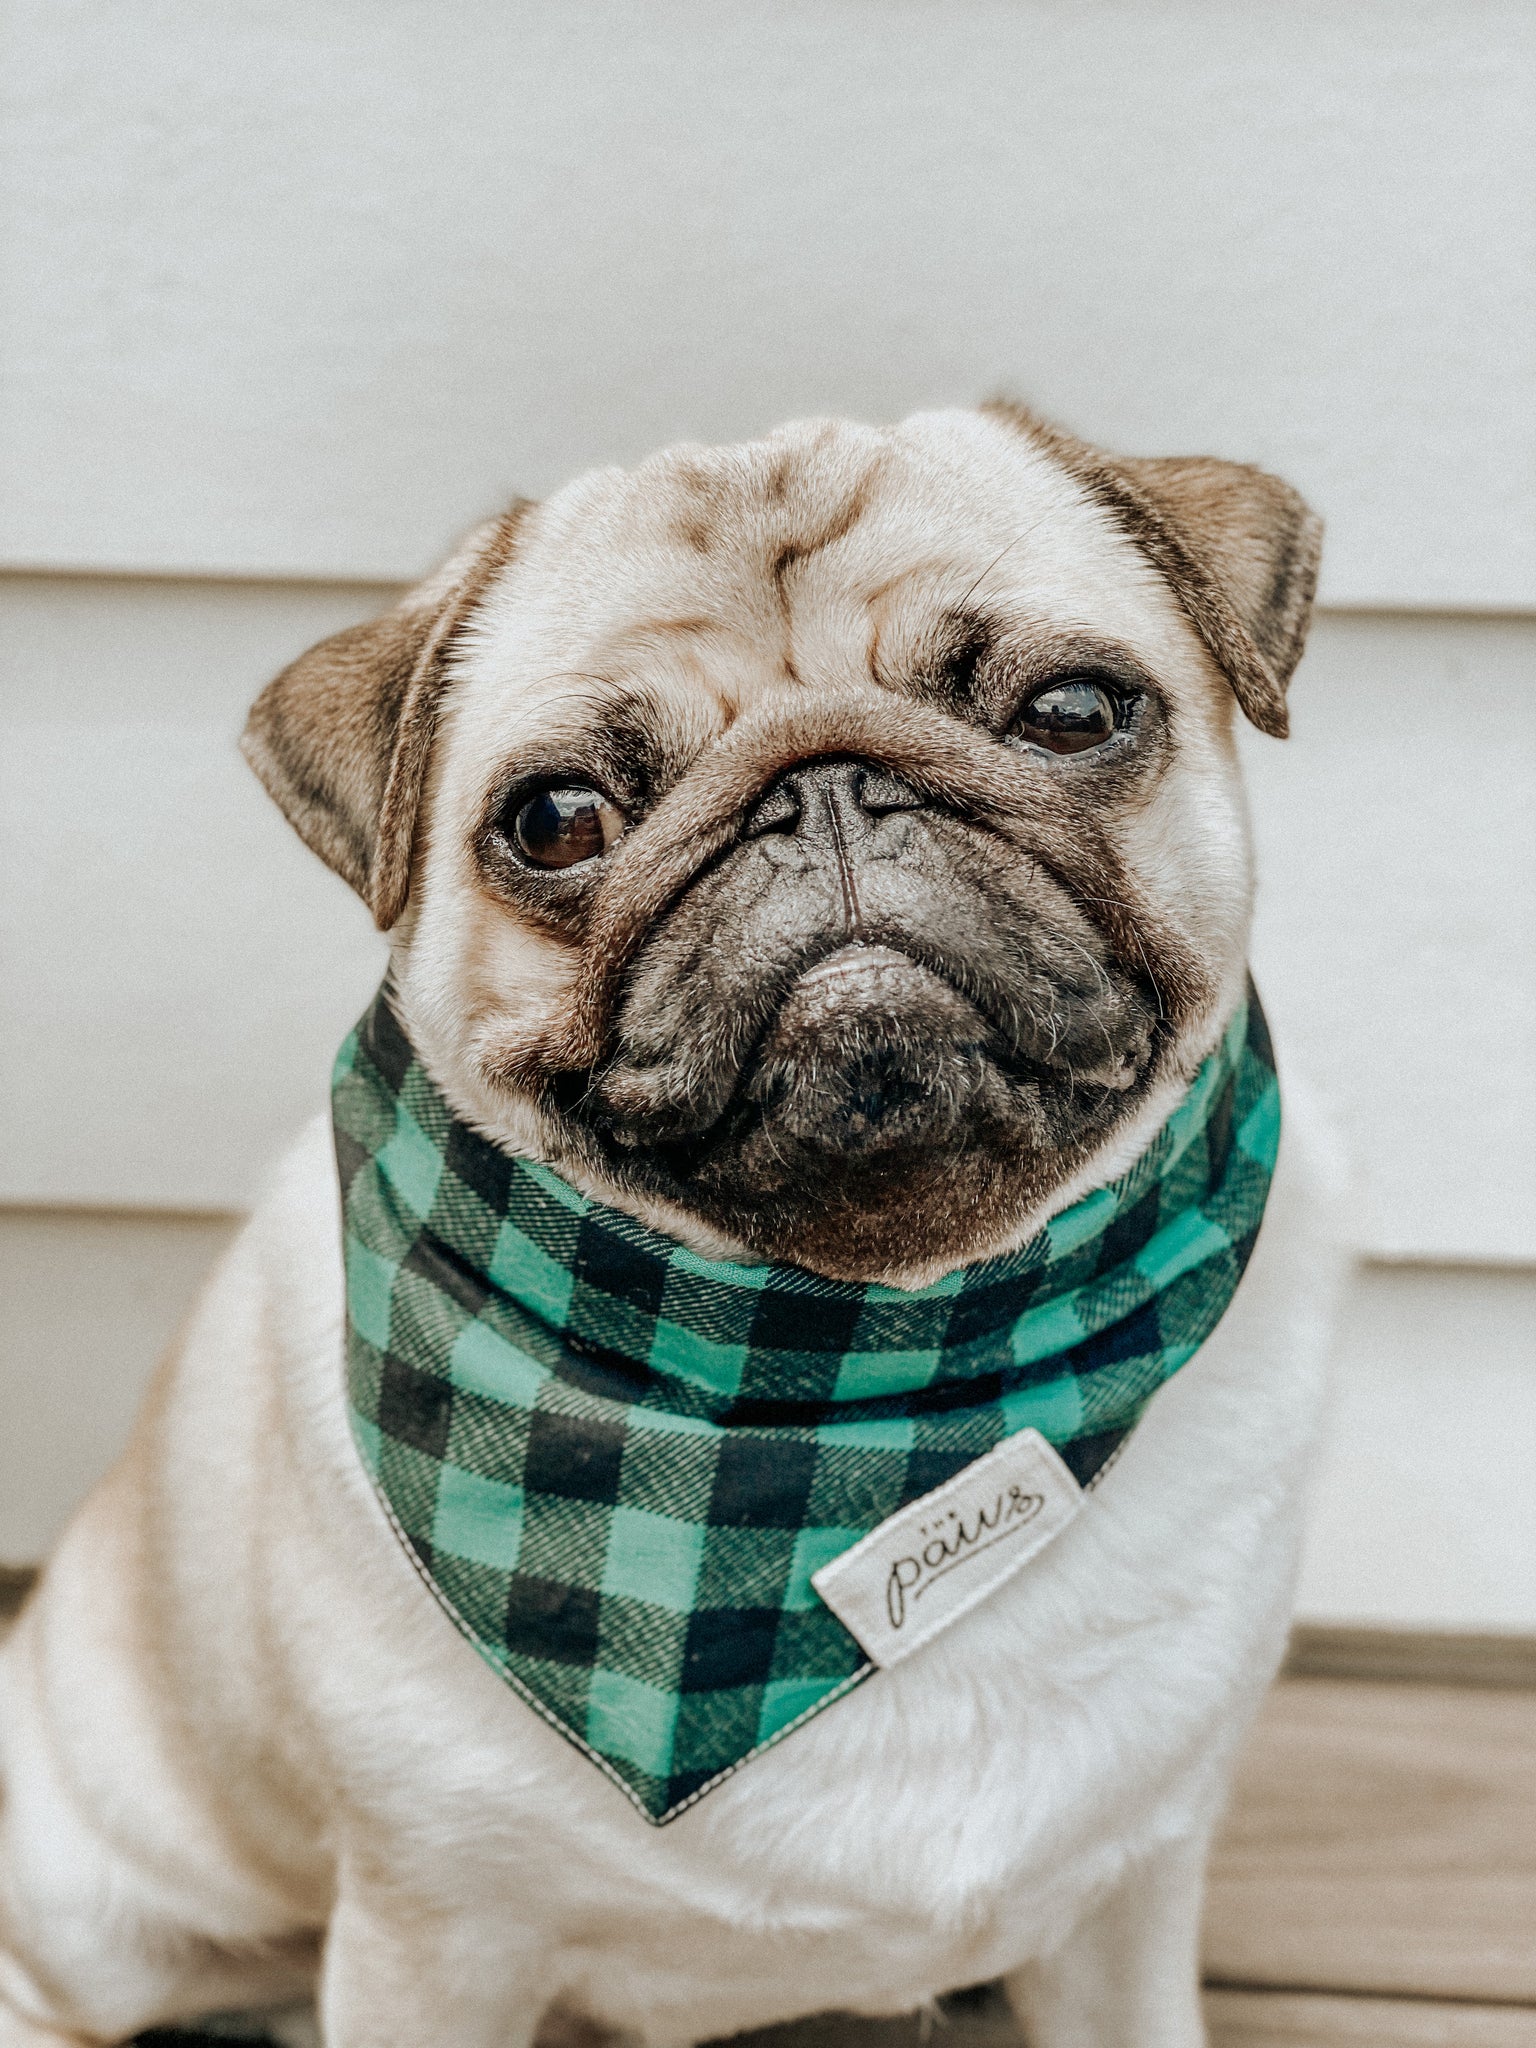 Bourbon dog bandana from The Paws